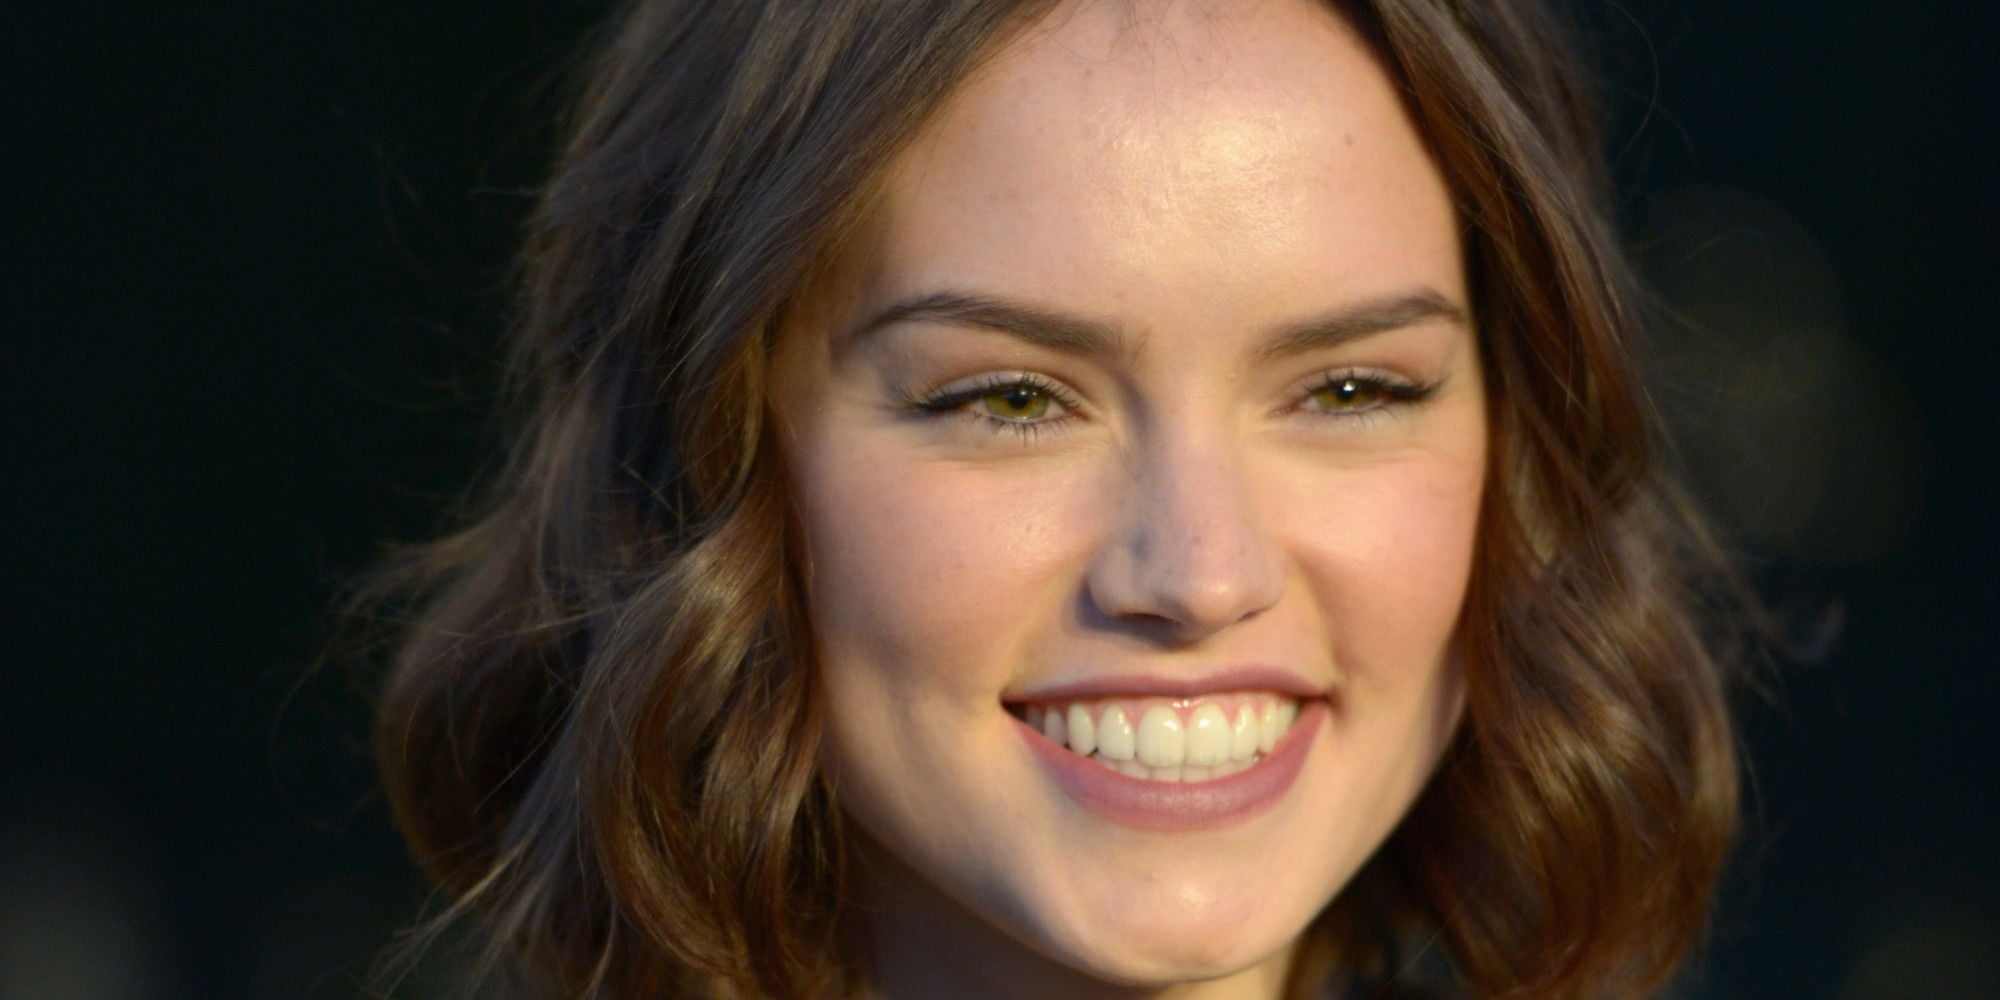 Smile Daisy Ridley Wallpaper 1080p